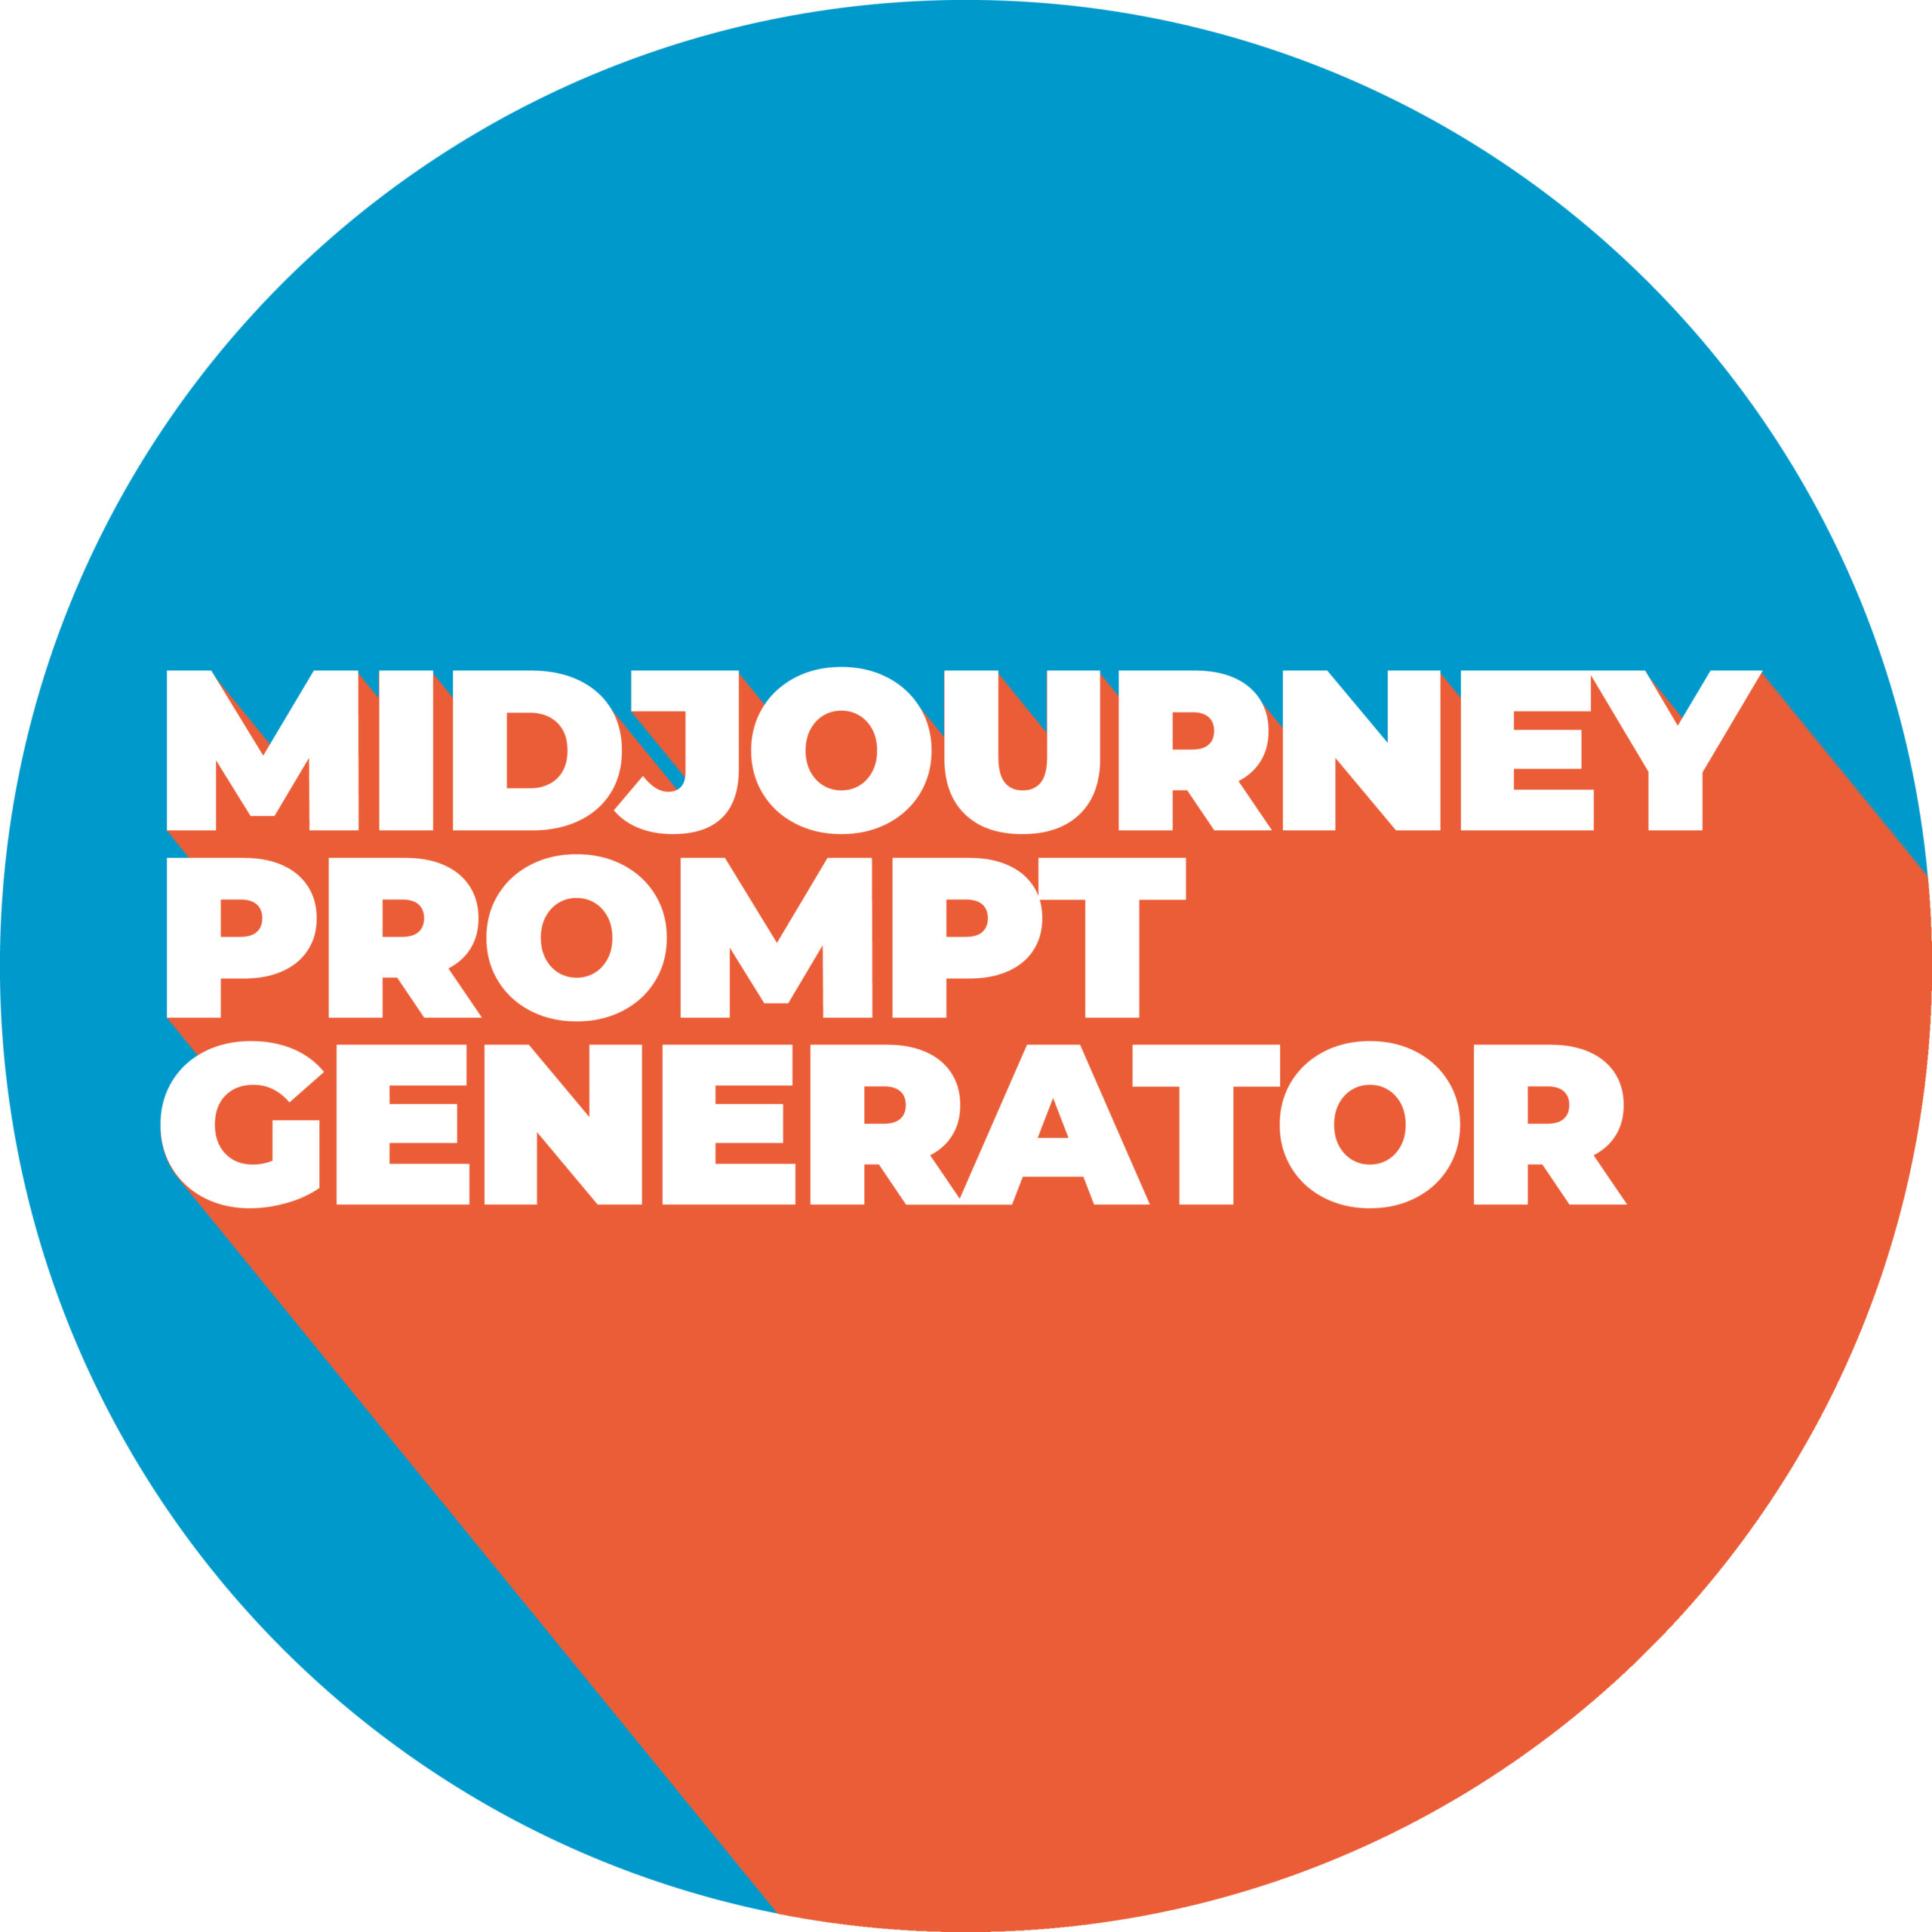 Mid journey Prompt Generator